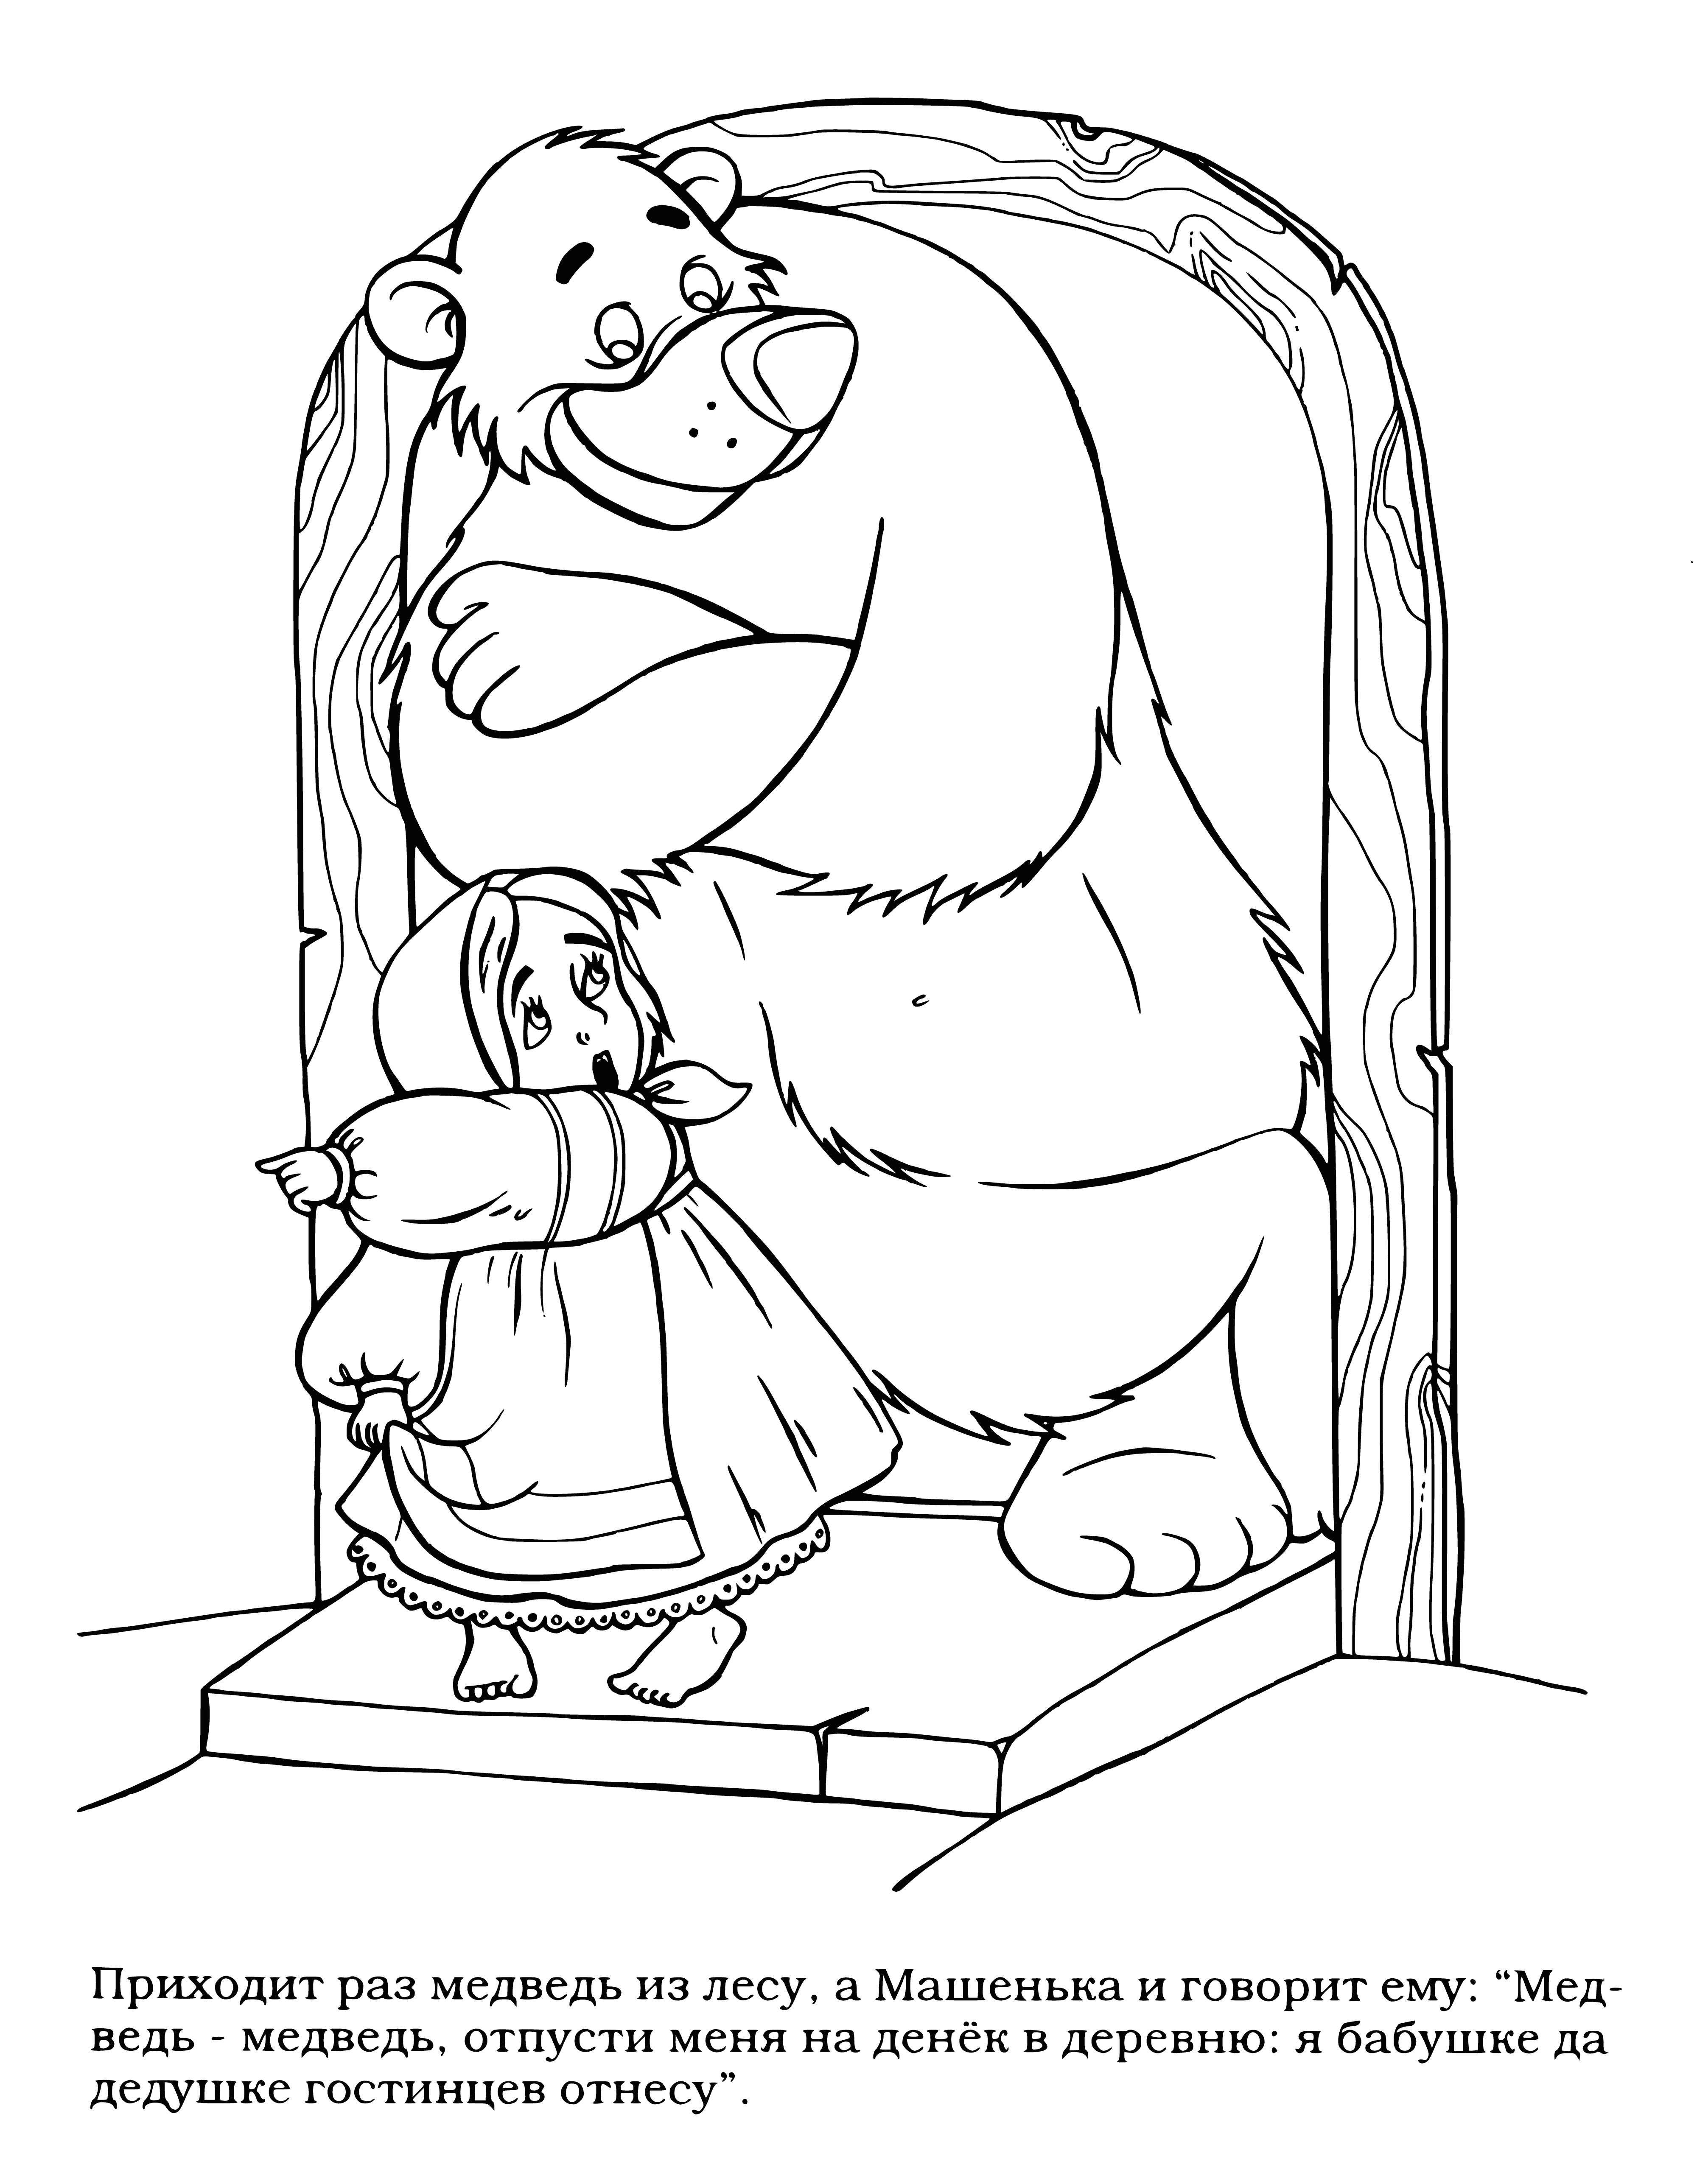 Masha and the bear coloring page